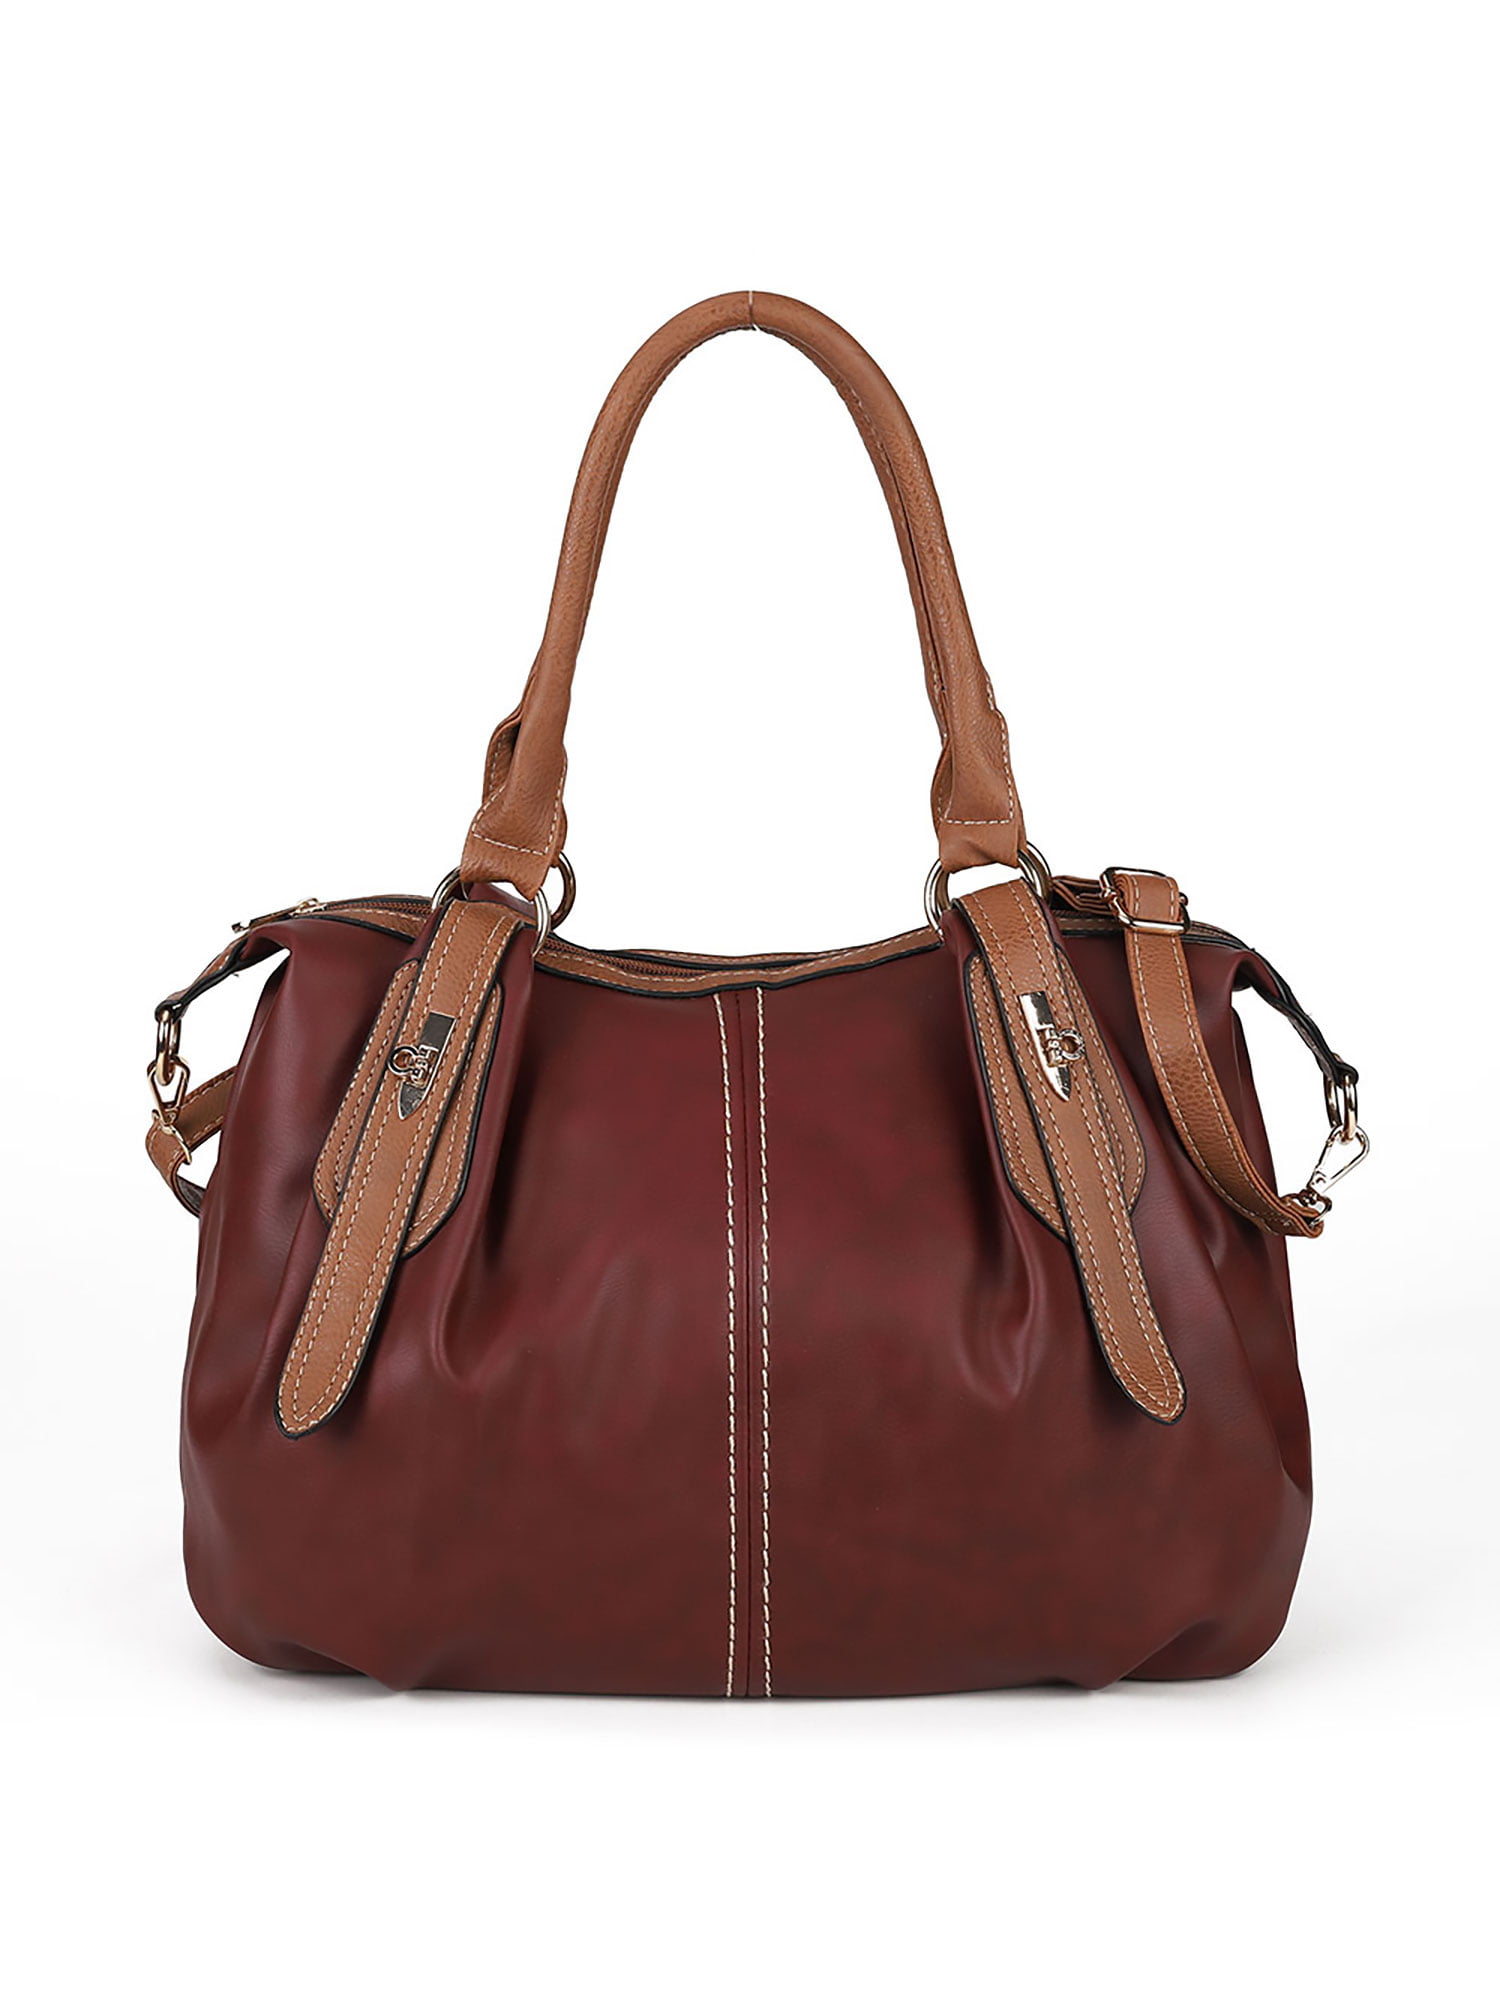 Women Ladies Crossbody Shoulder Bag Tote Messenger Leather Satchel Handbag ZP 